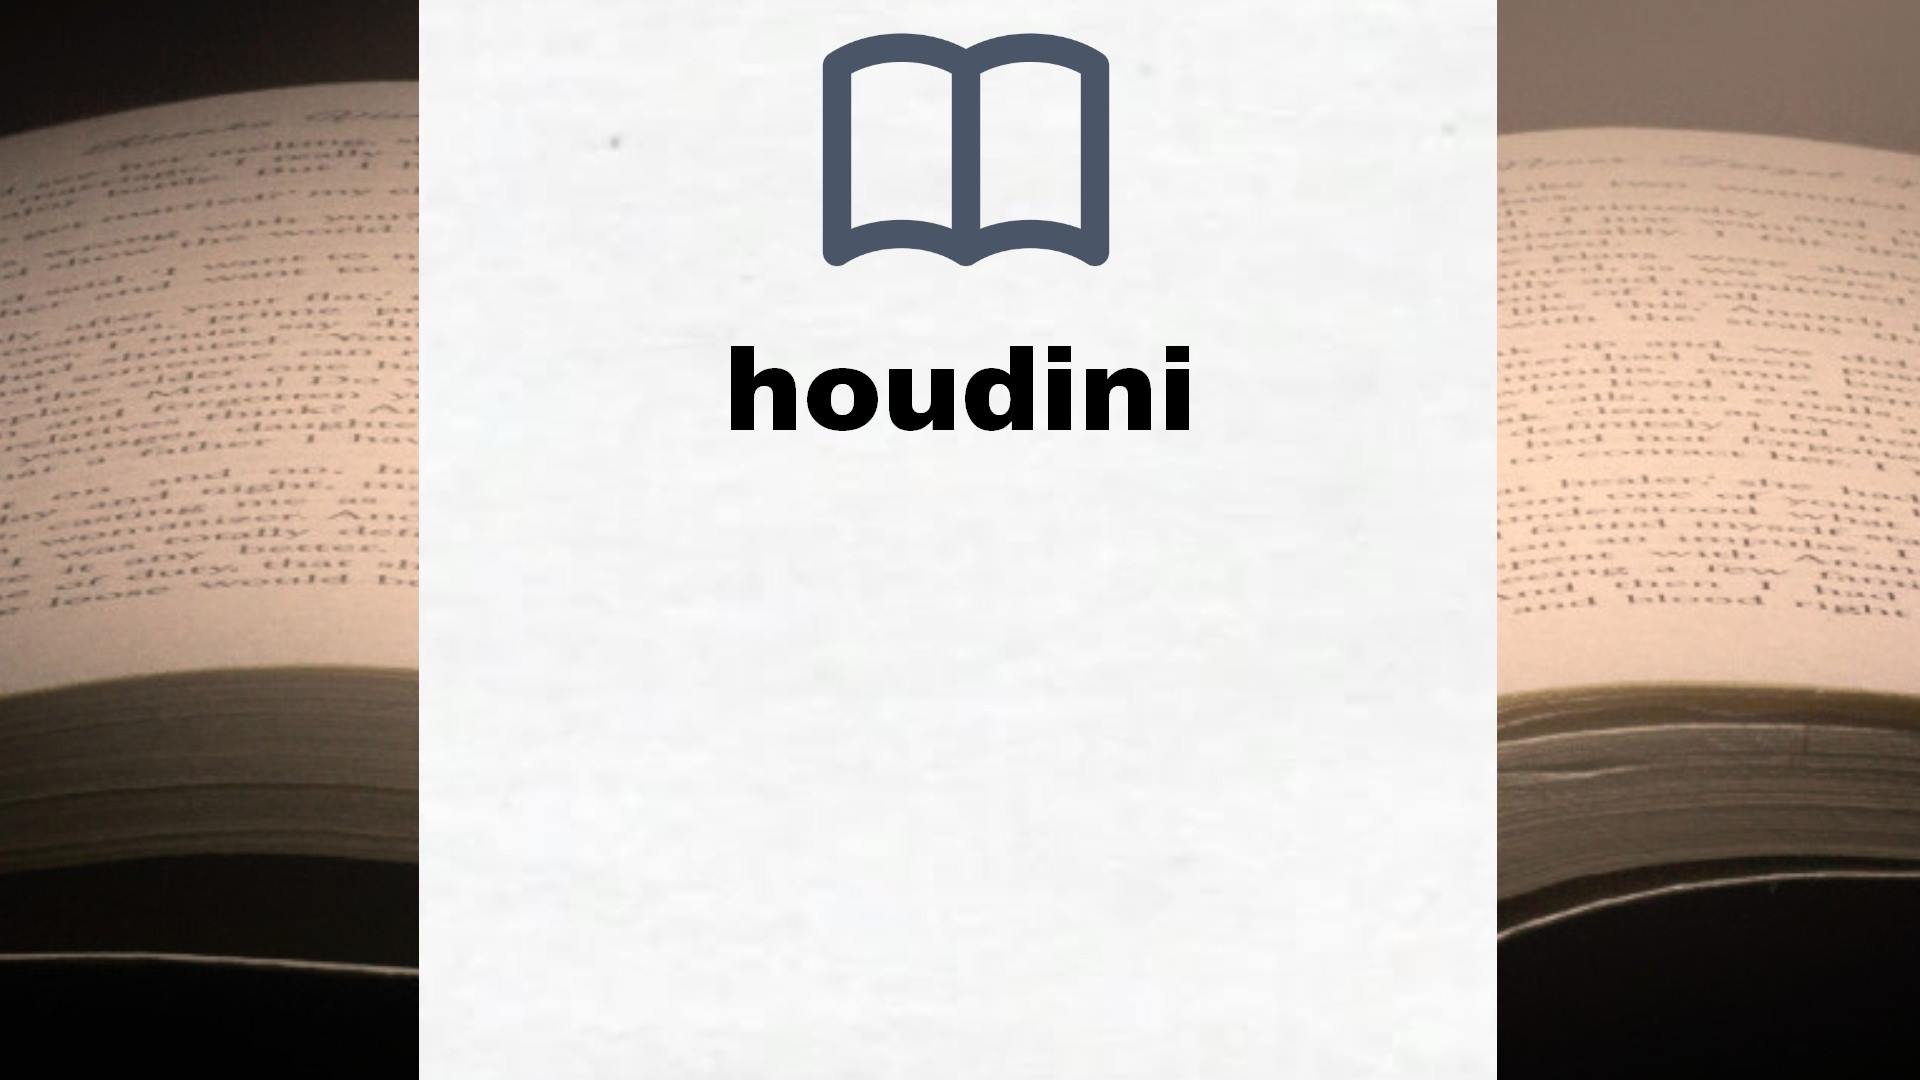 Libros sobre houdini